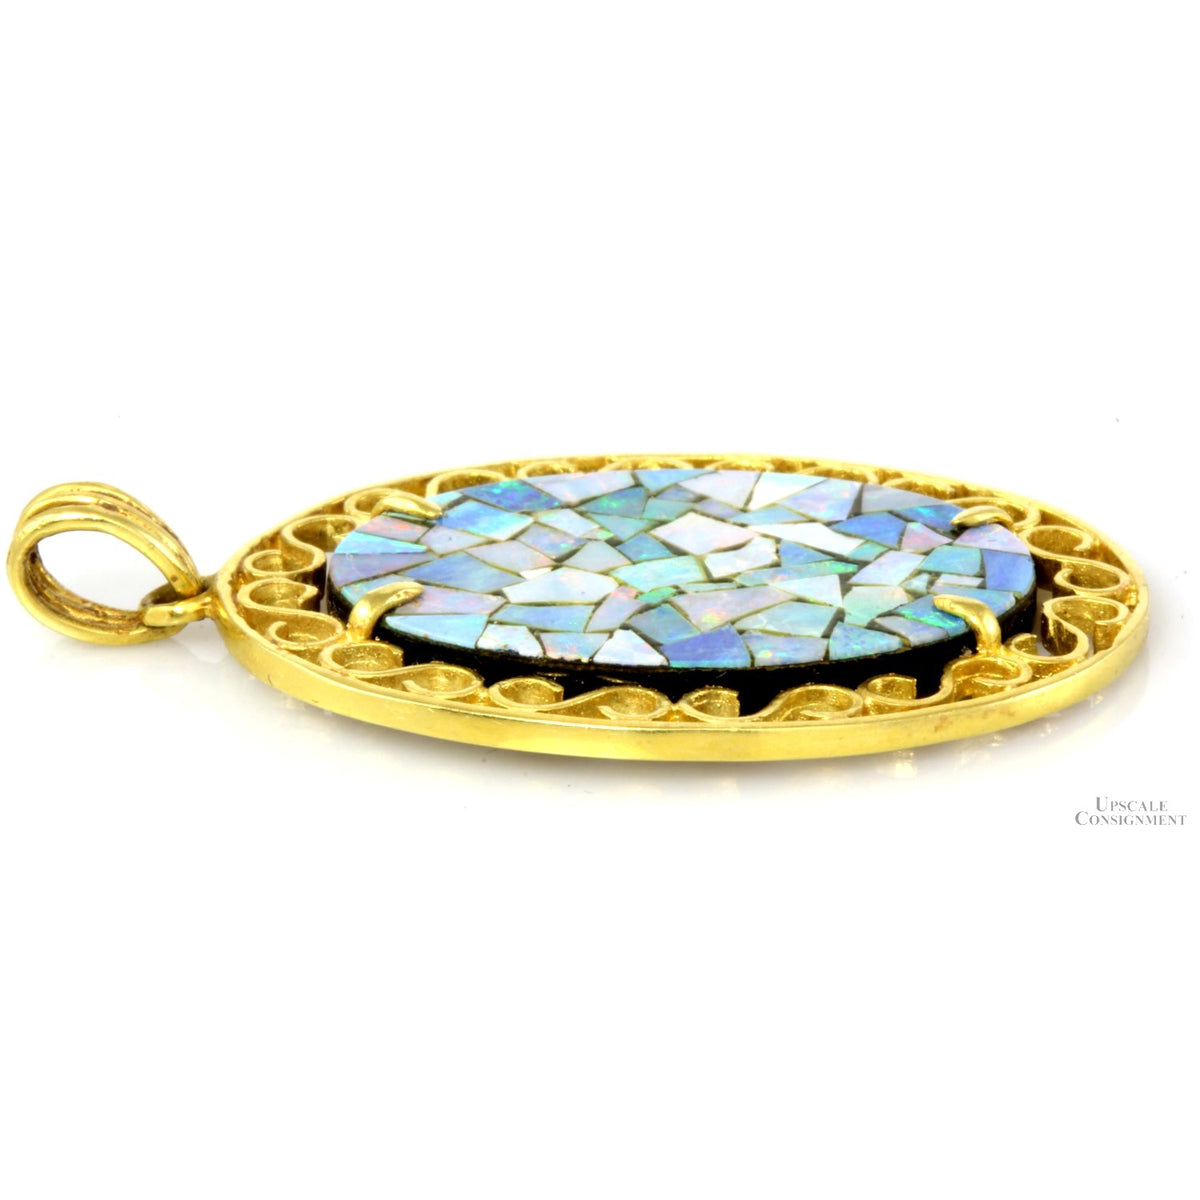 Australian Black Opal Mosaic 18K Yellow Gold Doublet Pendant